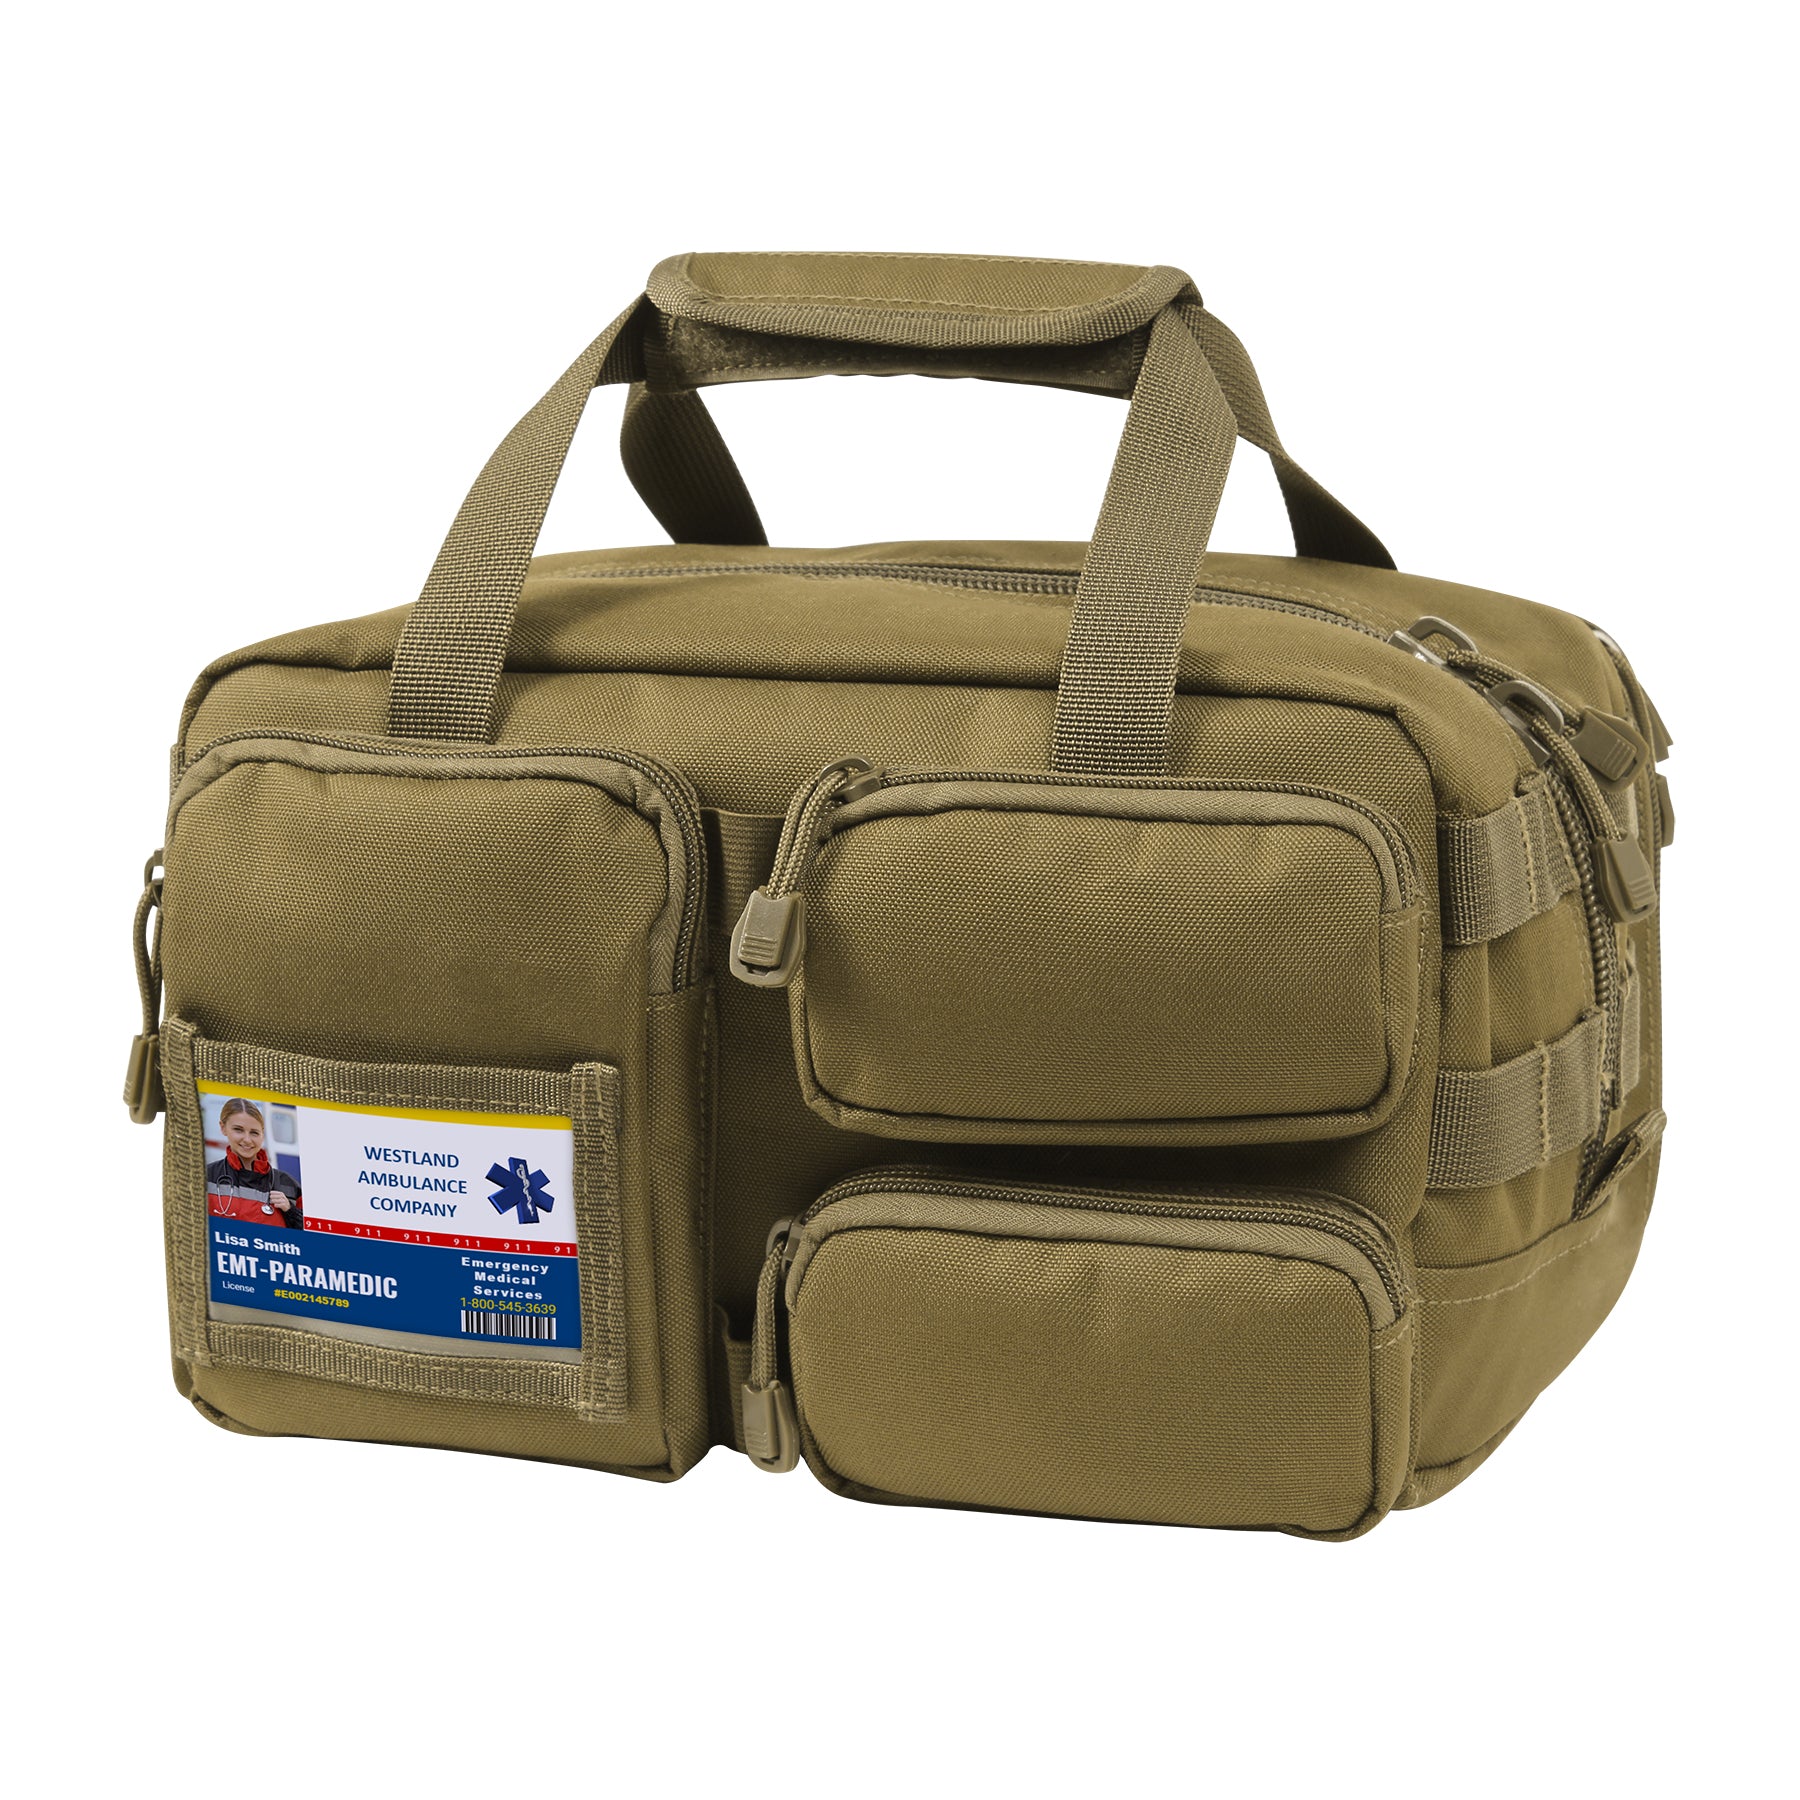 Milspec Tactical Trauma Kit First Aid Kit MilTac Tactical Military Outdoor Gear Australia